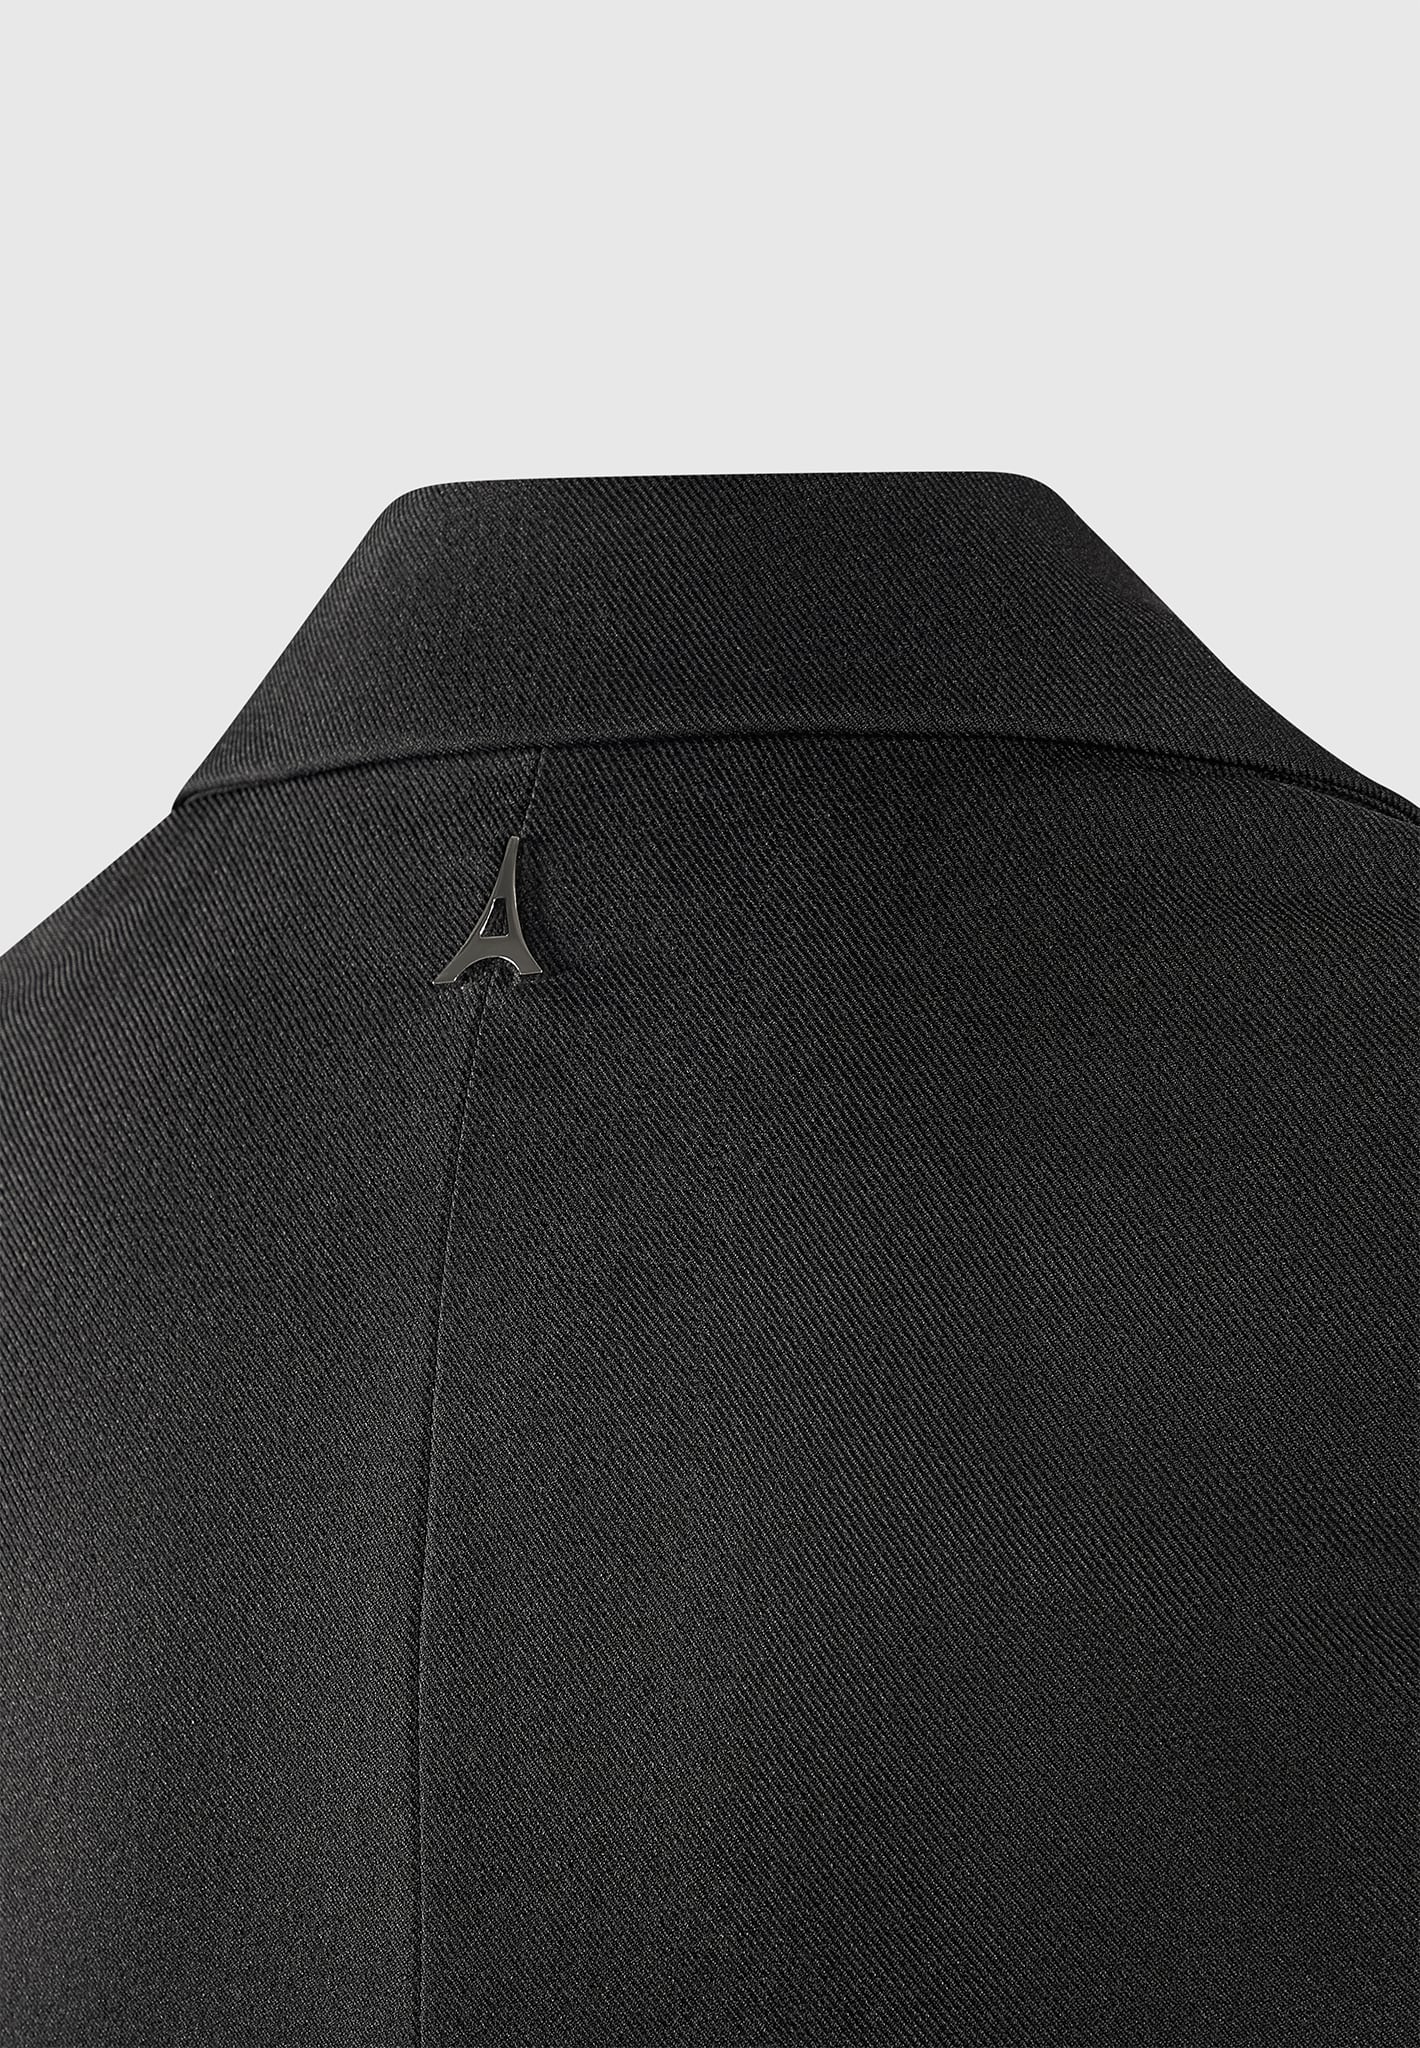 Tailored Blazer Dress with Reversible Corset - Black